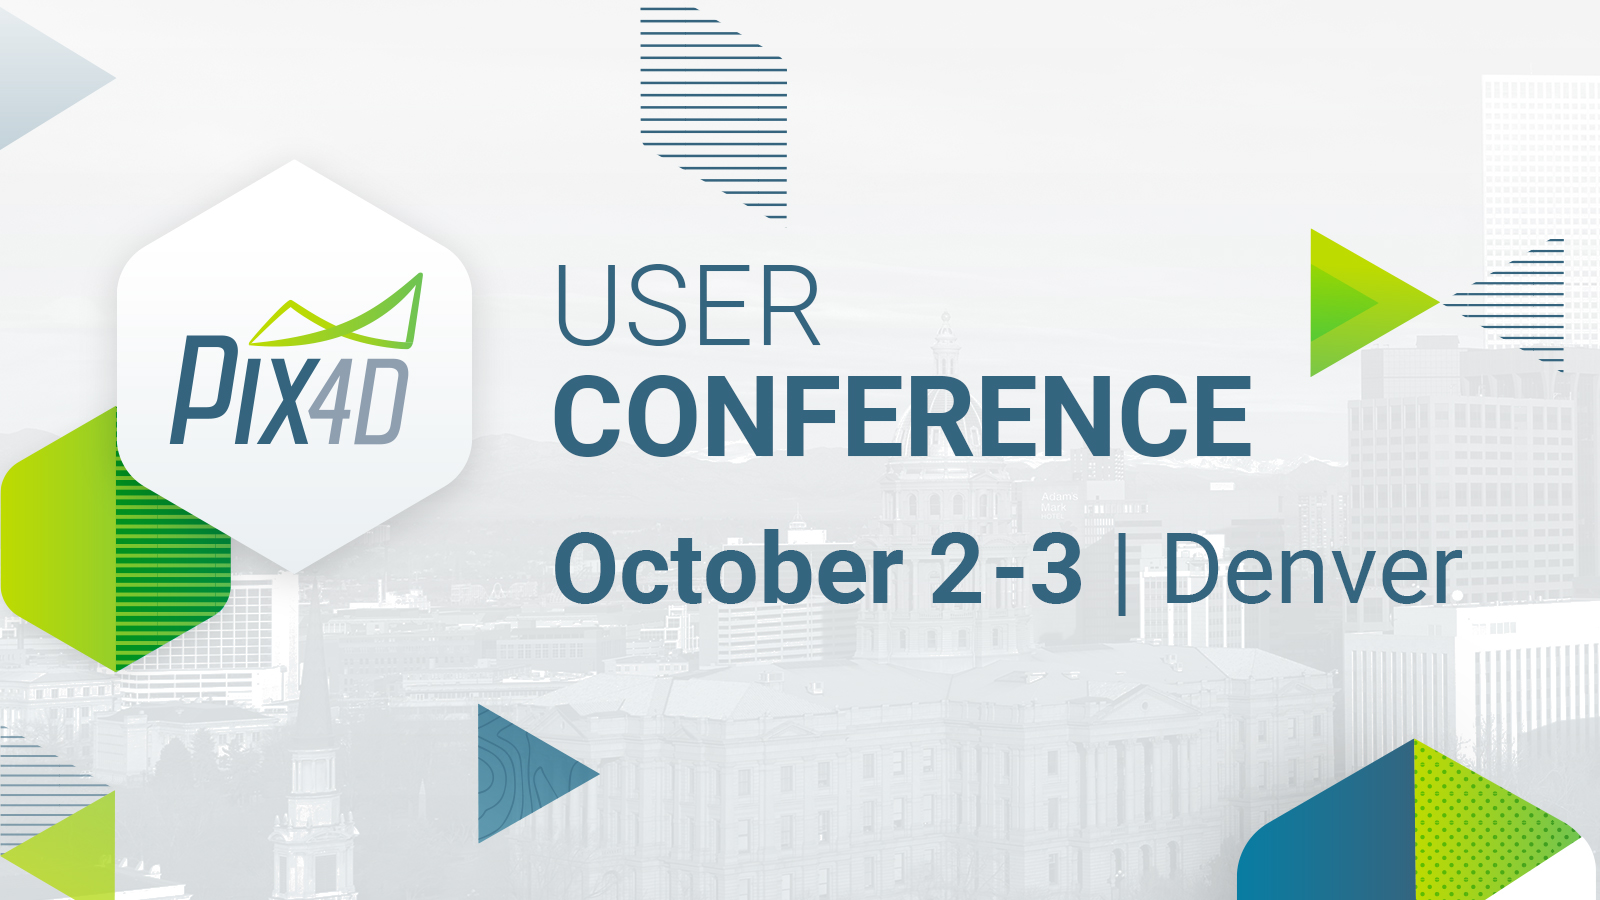 Pix4D User Conference 2019 in Denver Colorado